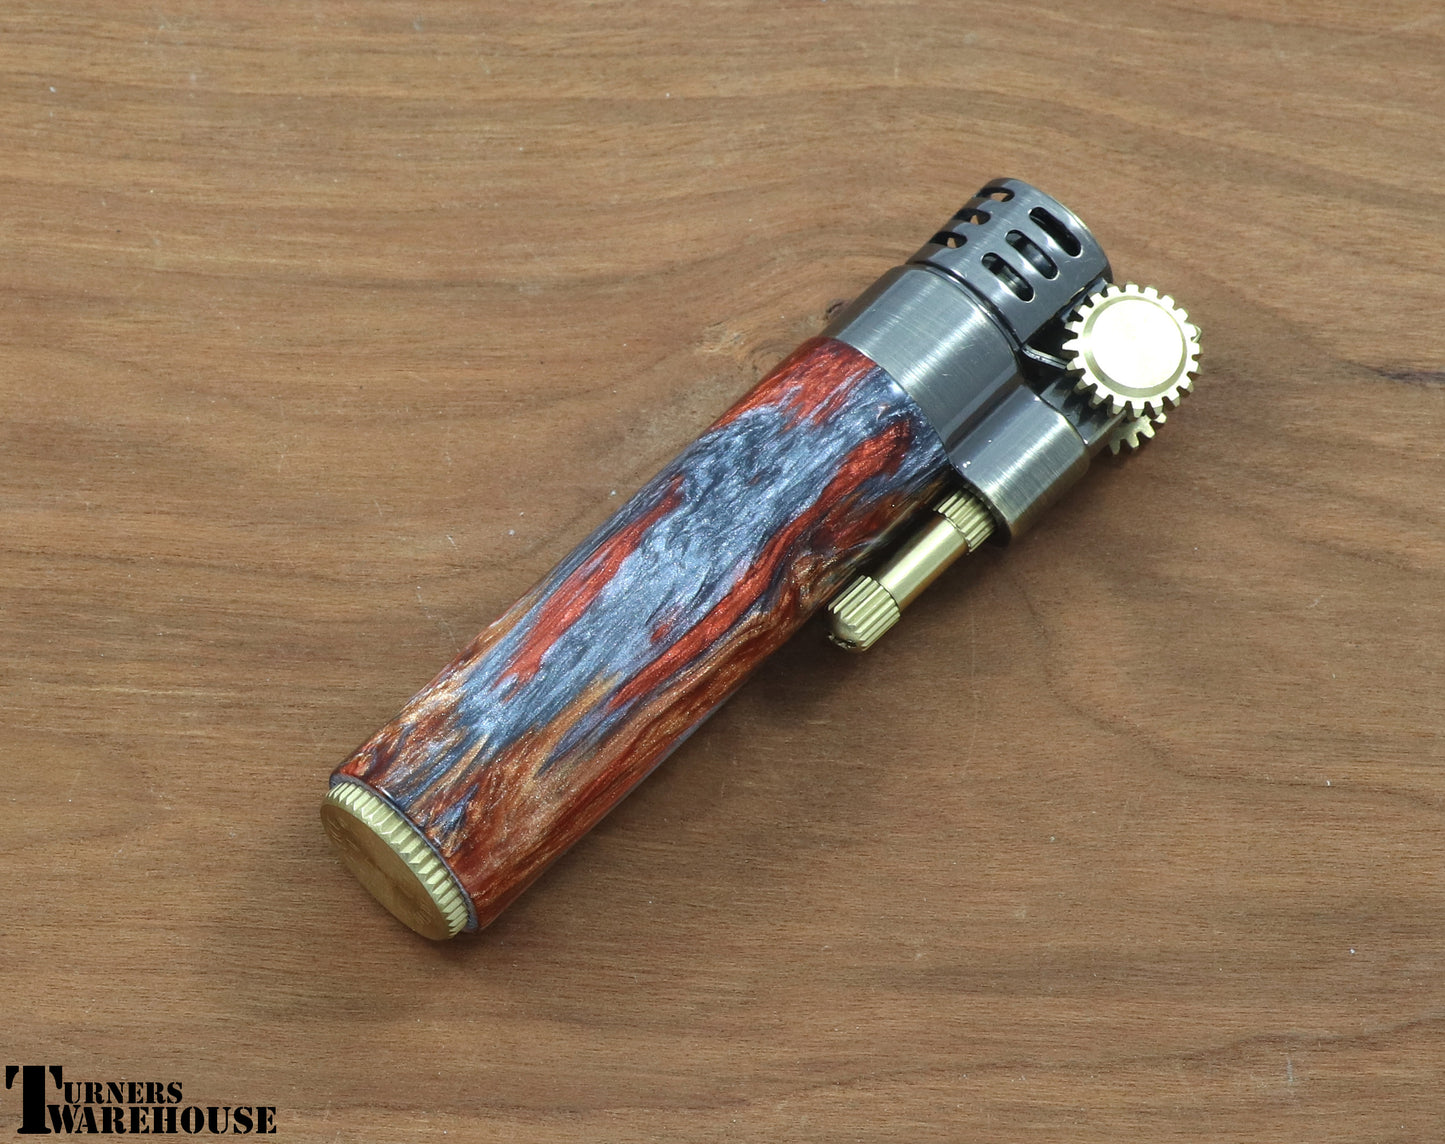 Steampunk Lighter with molten metals body